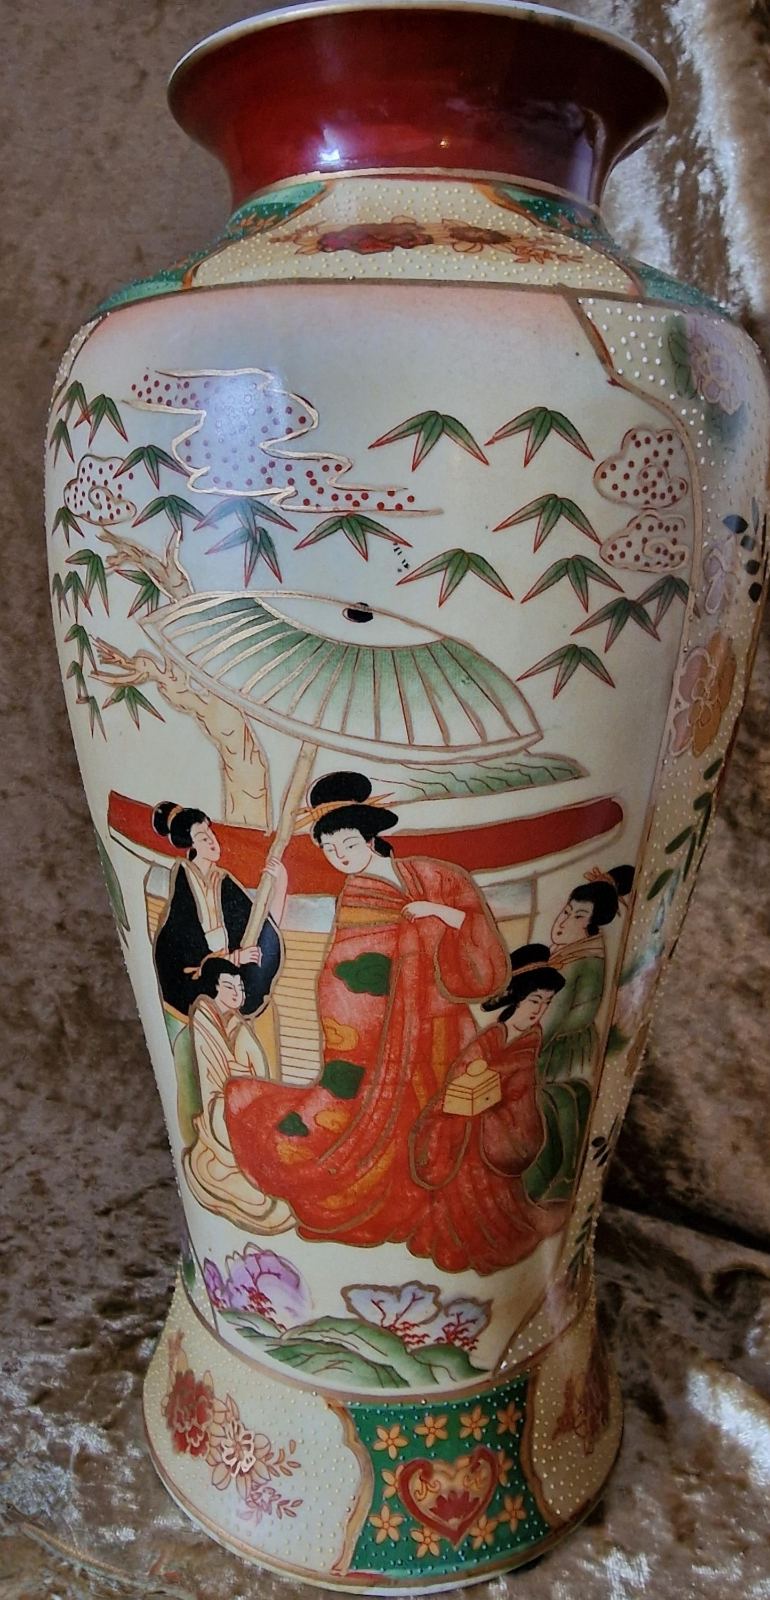  Vase with elegant Oriental designs, showcasing intricate patterns